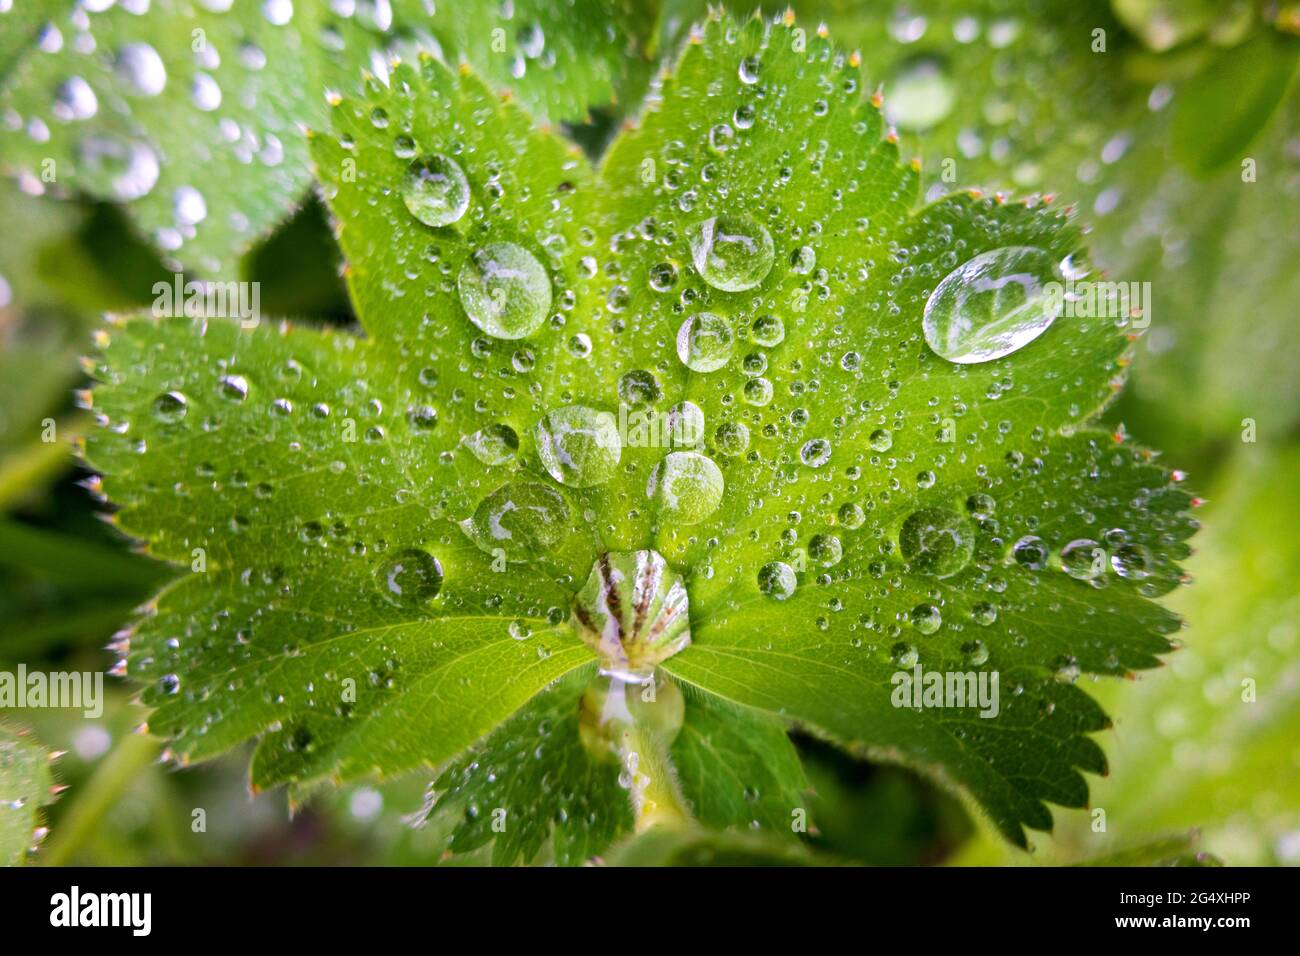 Ladys mantle (Alchemilla vulgaris) leaf covered in raindrops Stock Photo